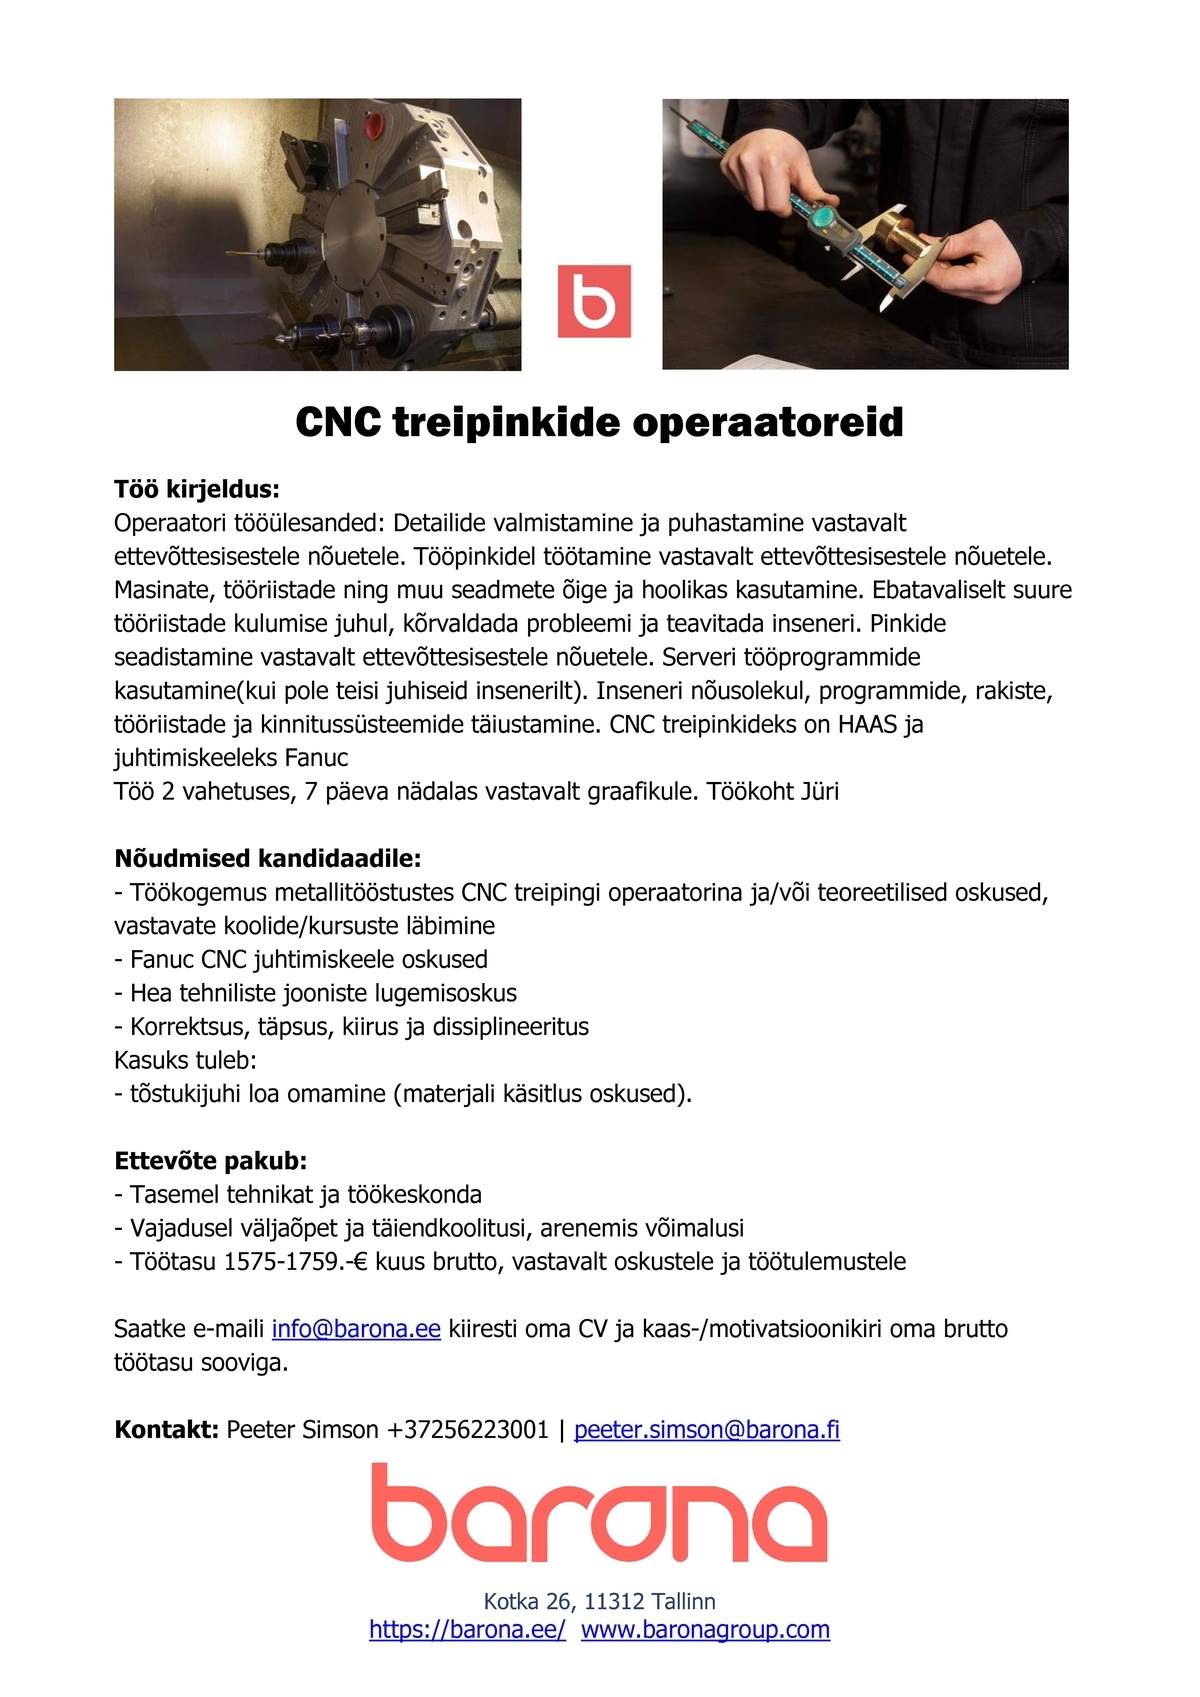 Barona Eesti OÜ CNC treipingi operaator 